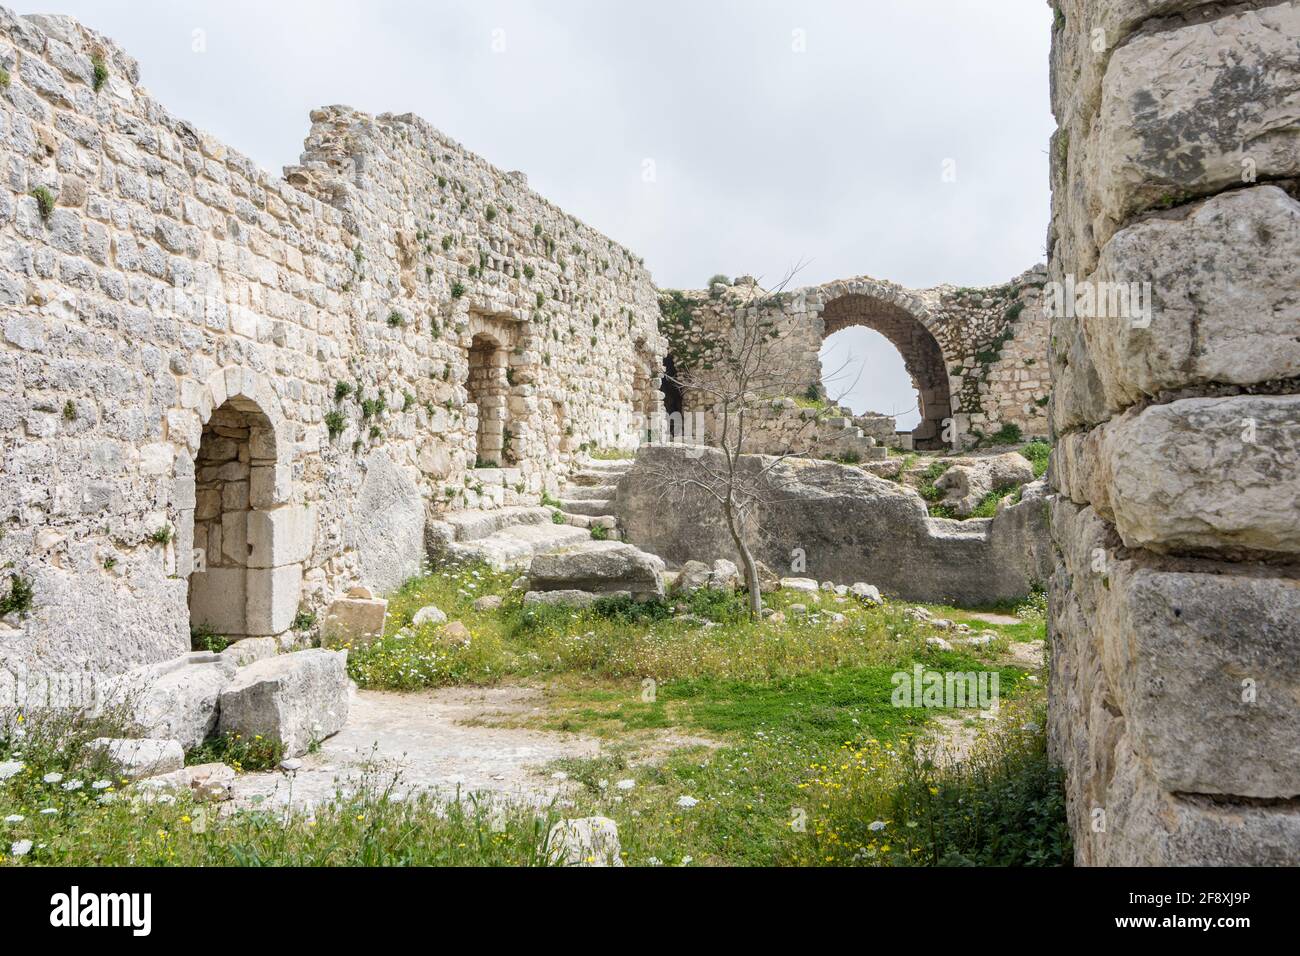 La citadelle de Smar Jbeil, ancien château de Crusader en ruine, Liban Banque D'Images